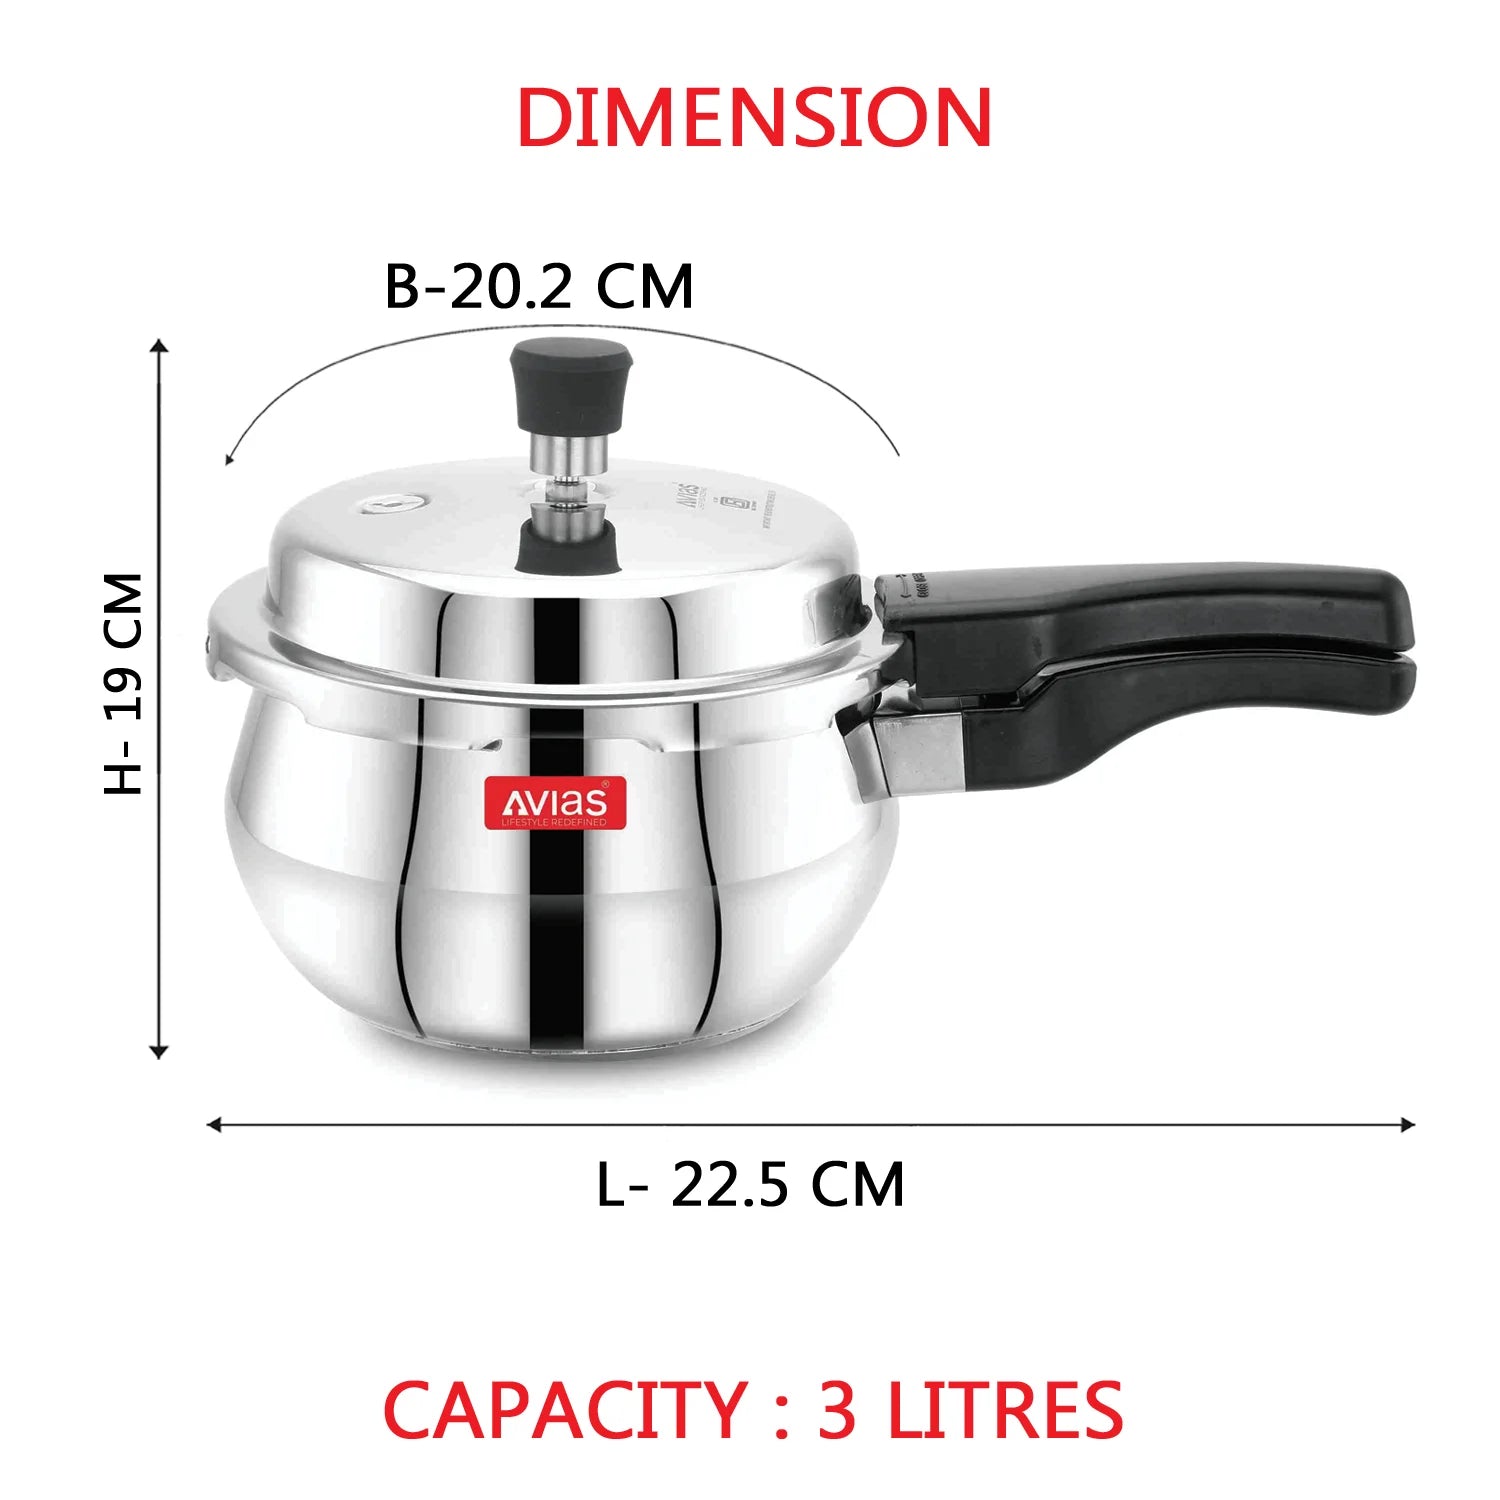 AVIAS Avanti Handi high-quality stainless steel pressure cooker 3 liters